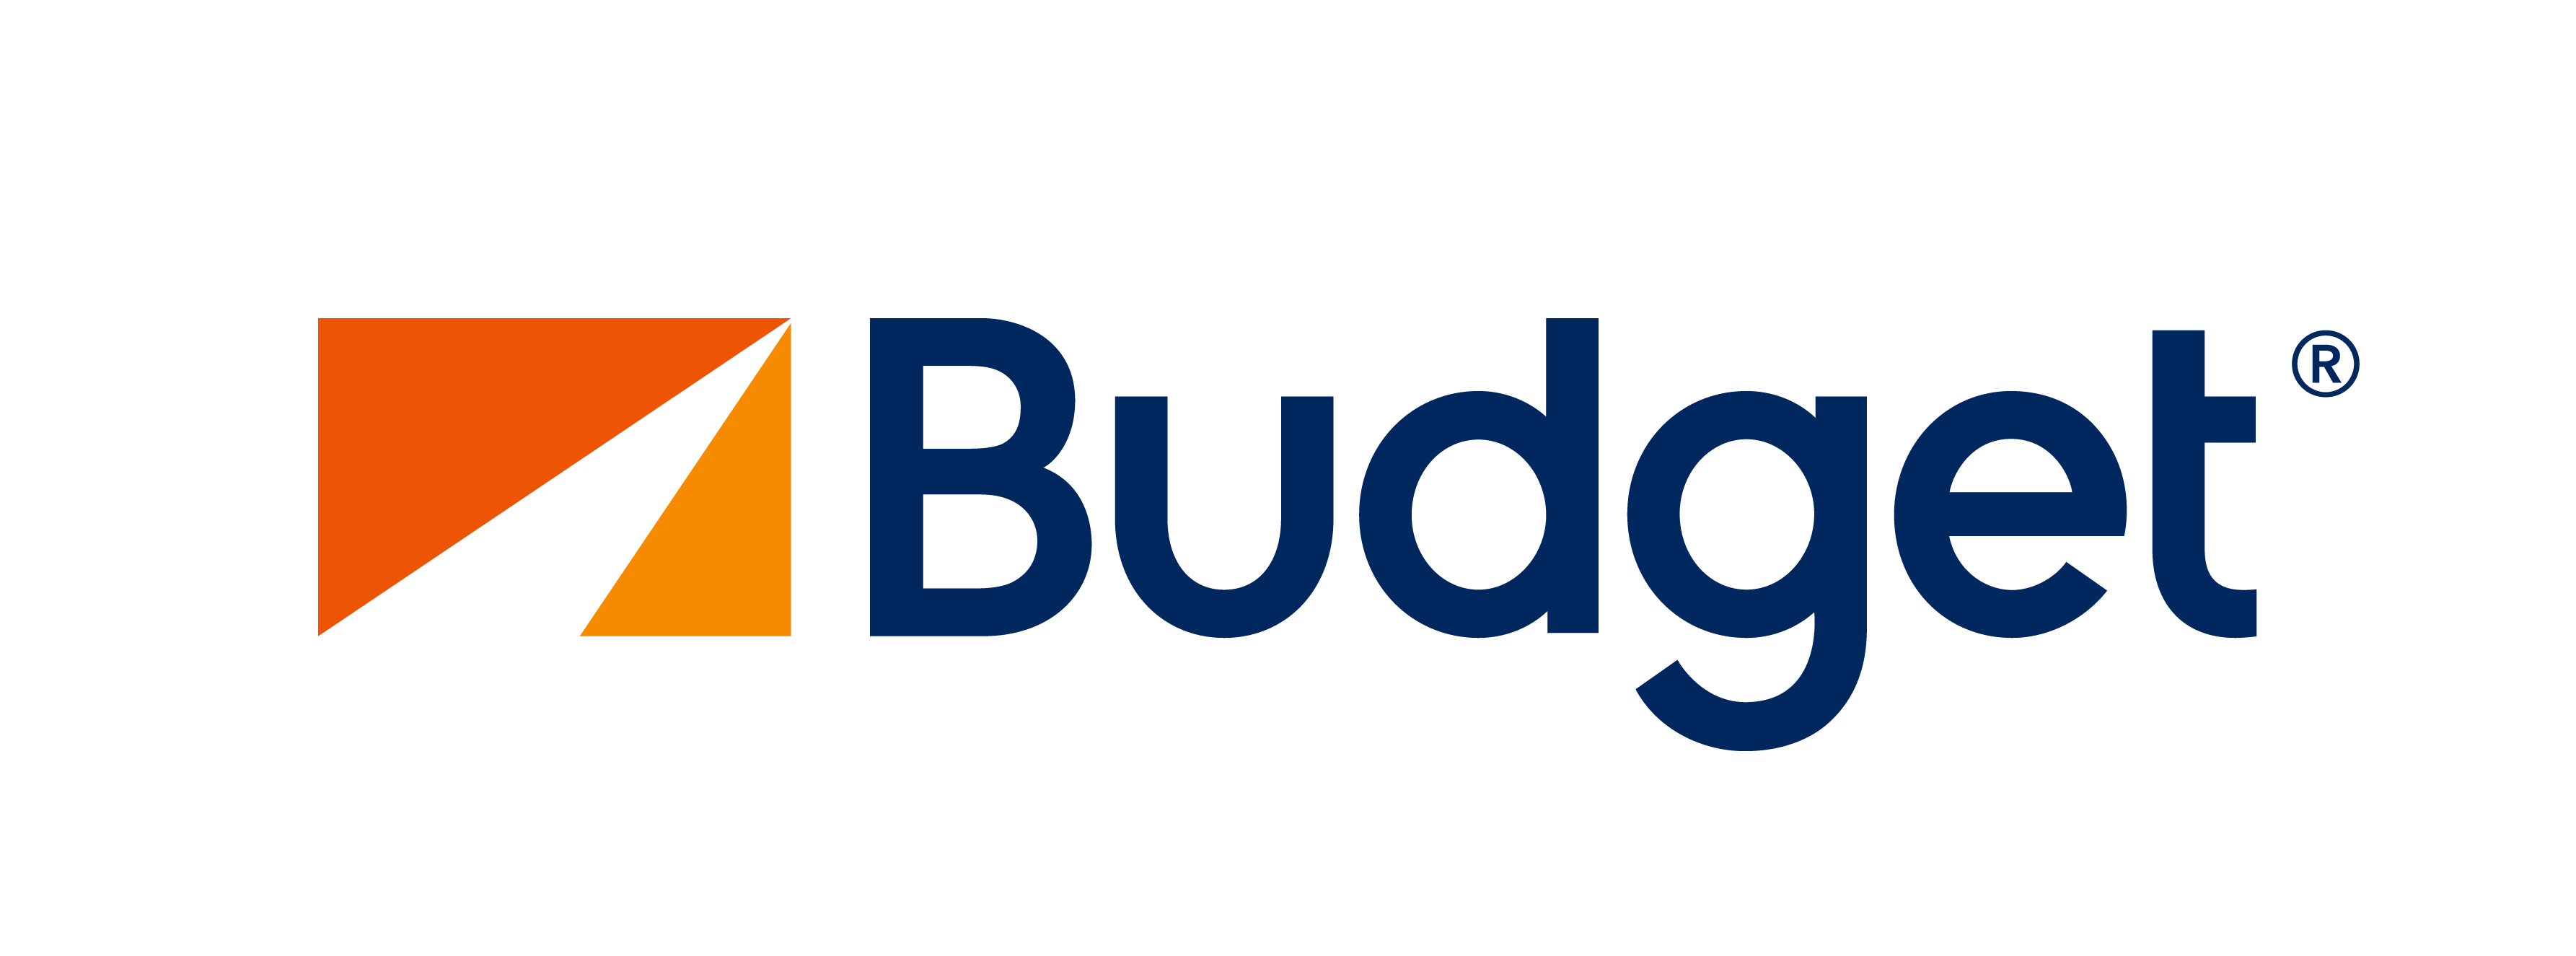 Budget Logo PNG Image Background